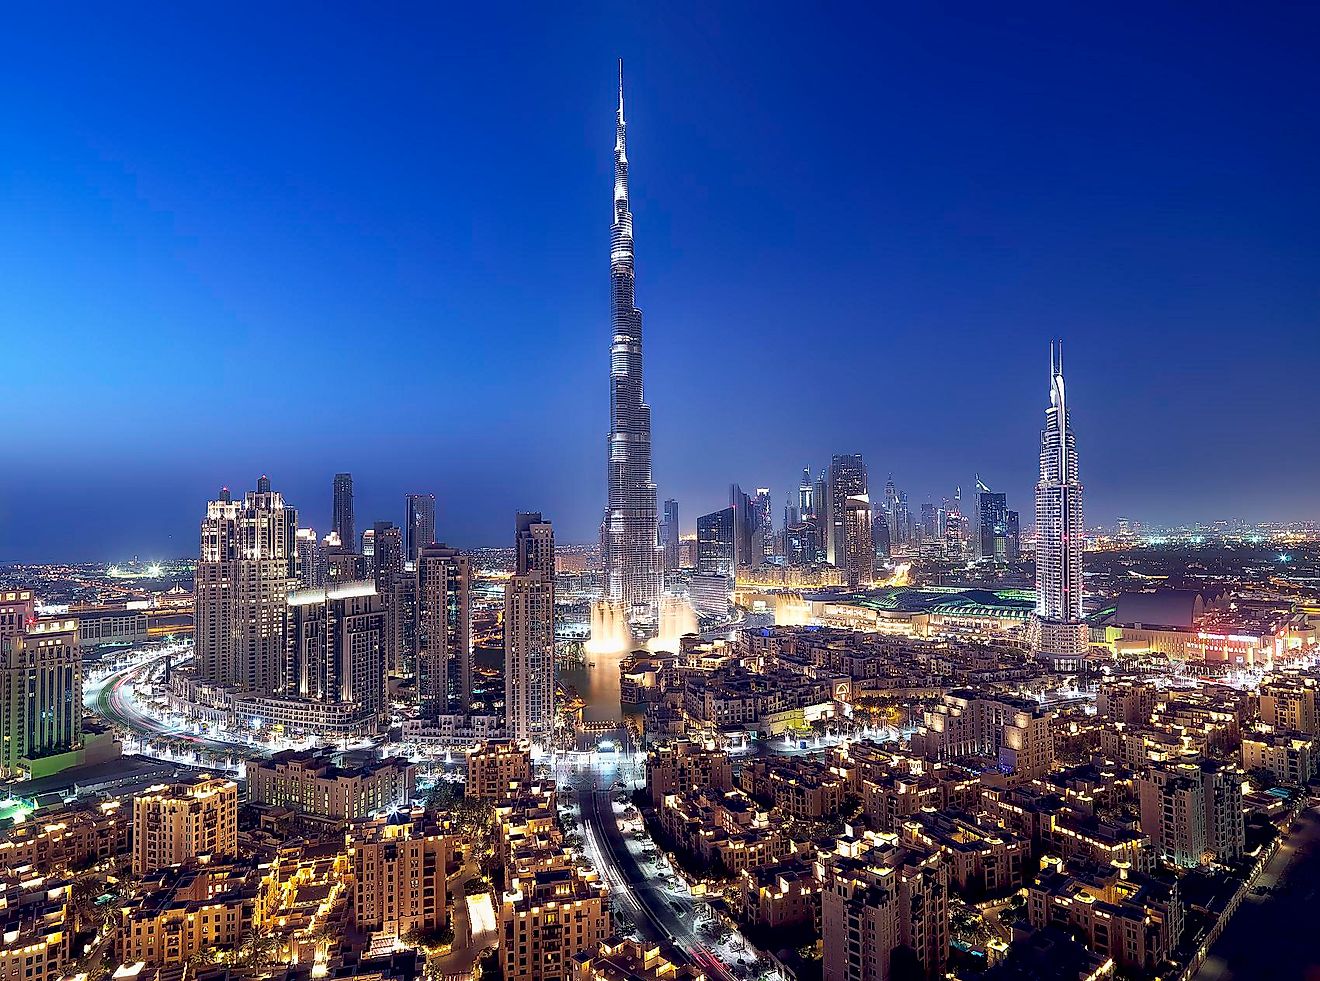 The Burj Khalifa in Dubai is the most popular tourist attraction in this cosmopolitan city.